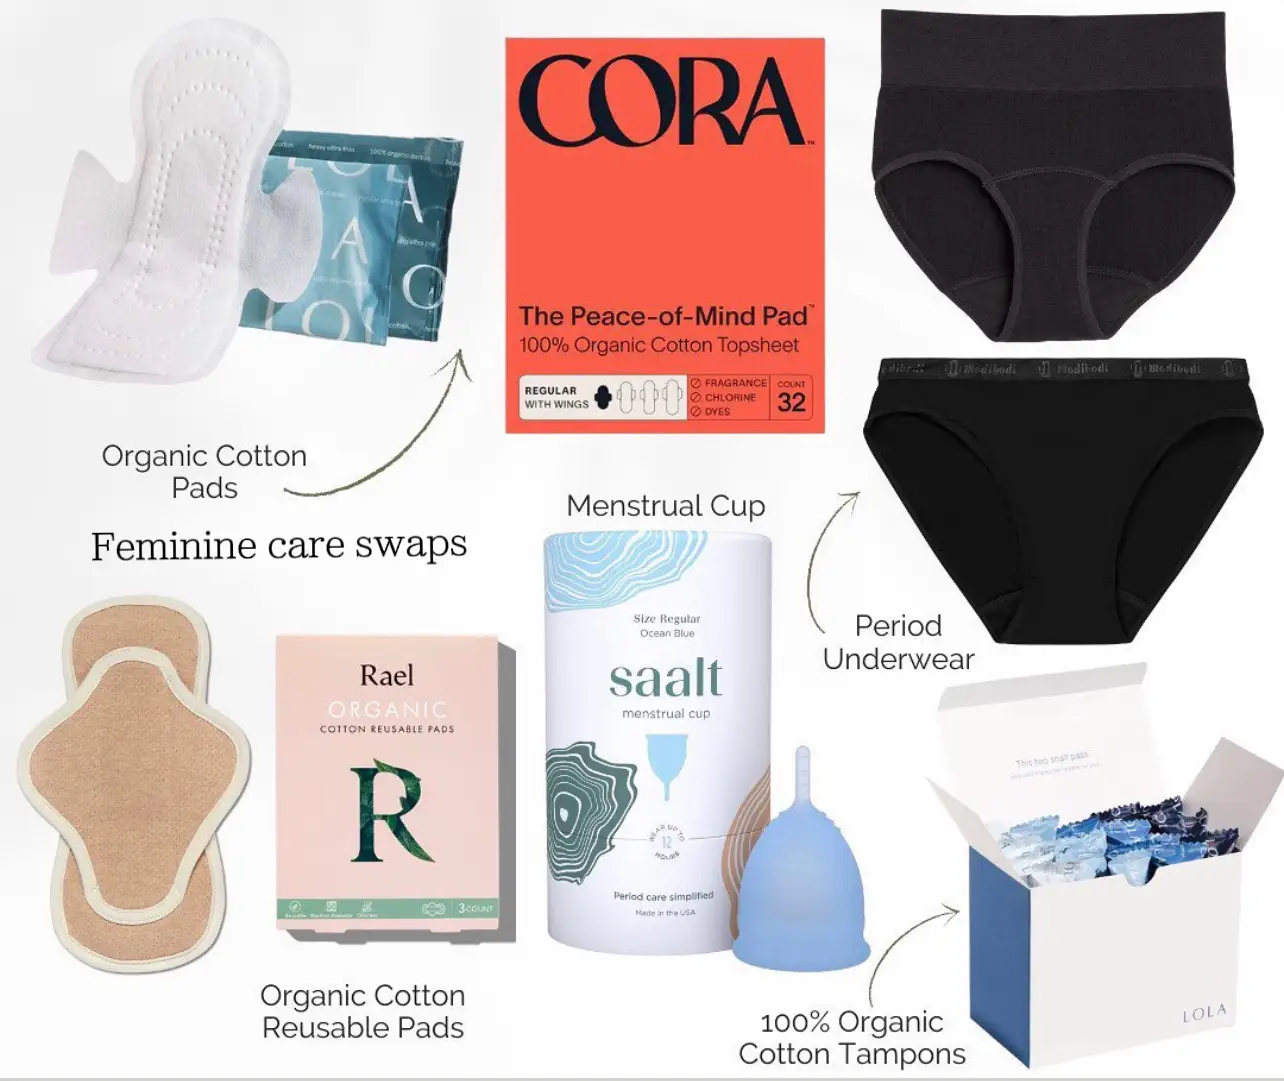 Rael Organic Cotton Overnight Period Underwear - Unscented - S/M - 10ct